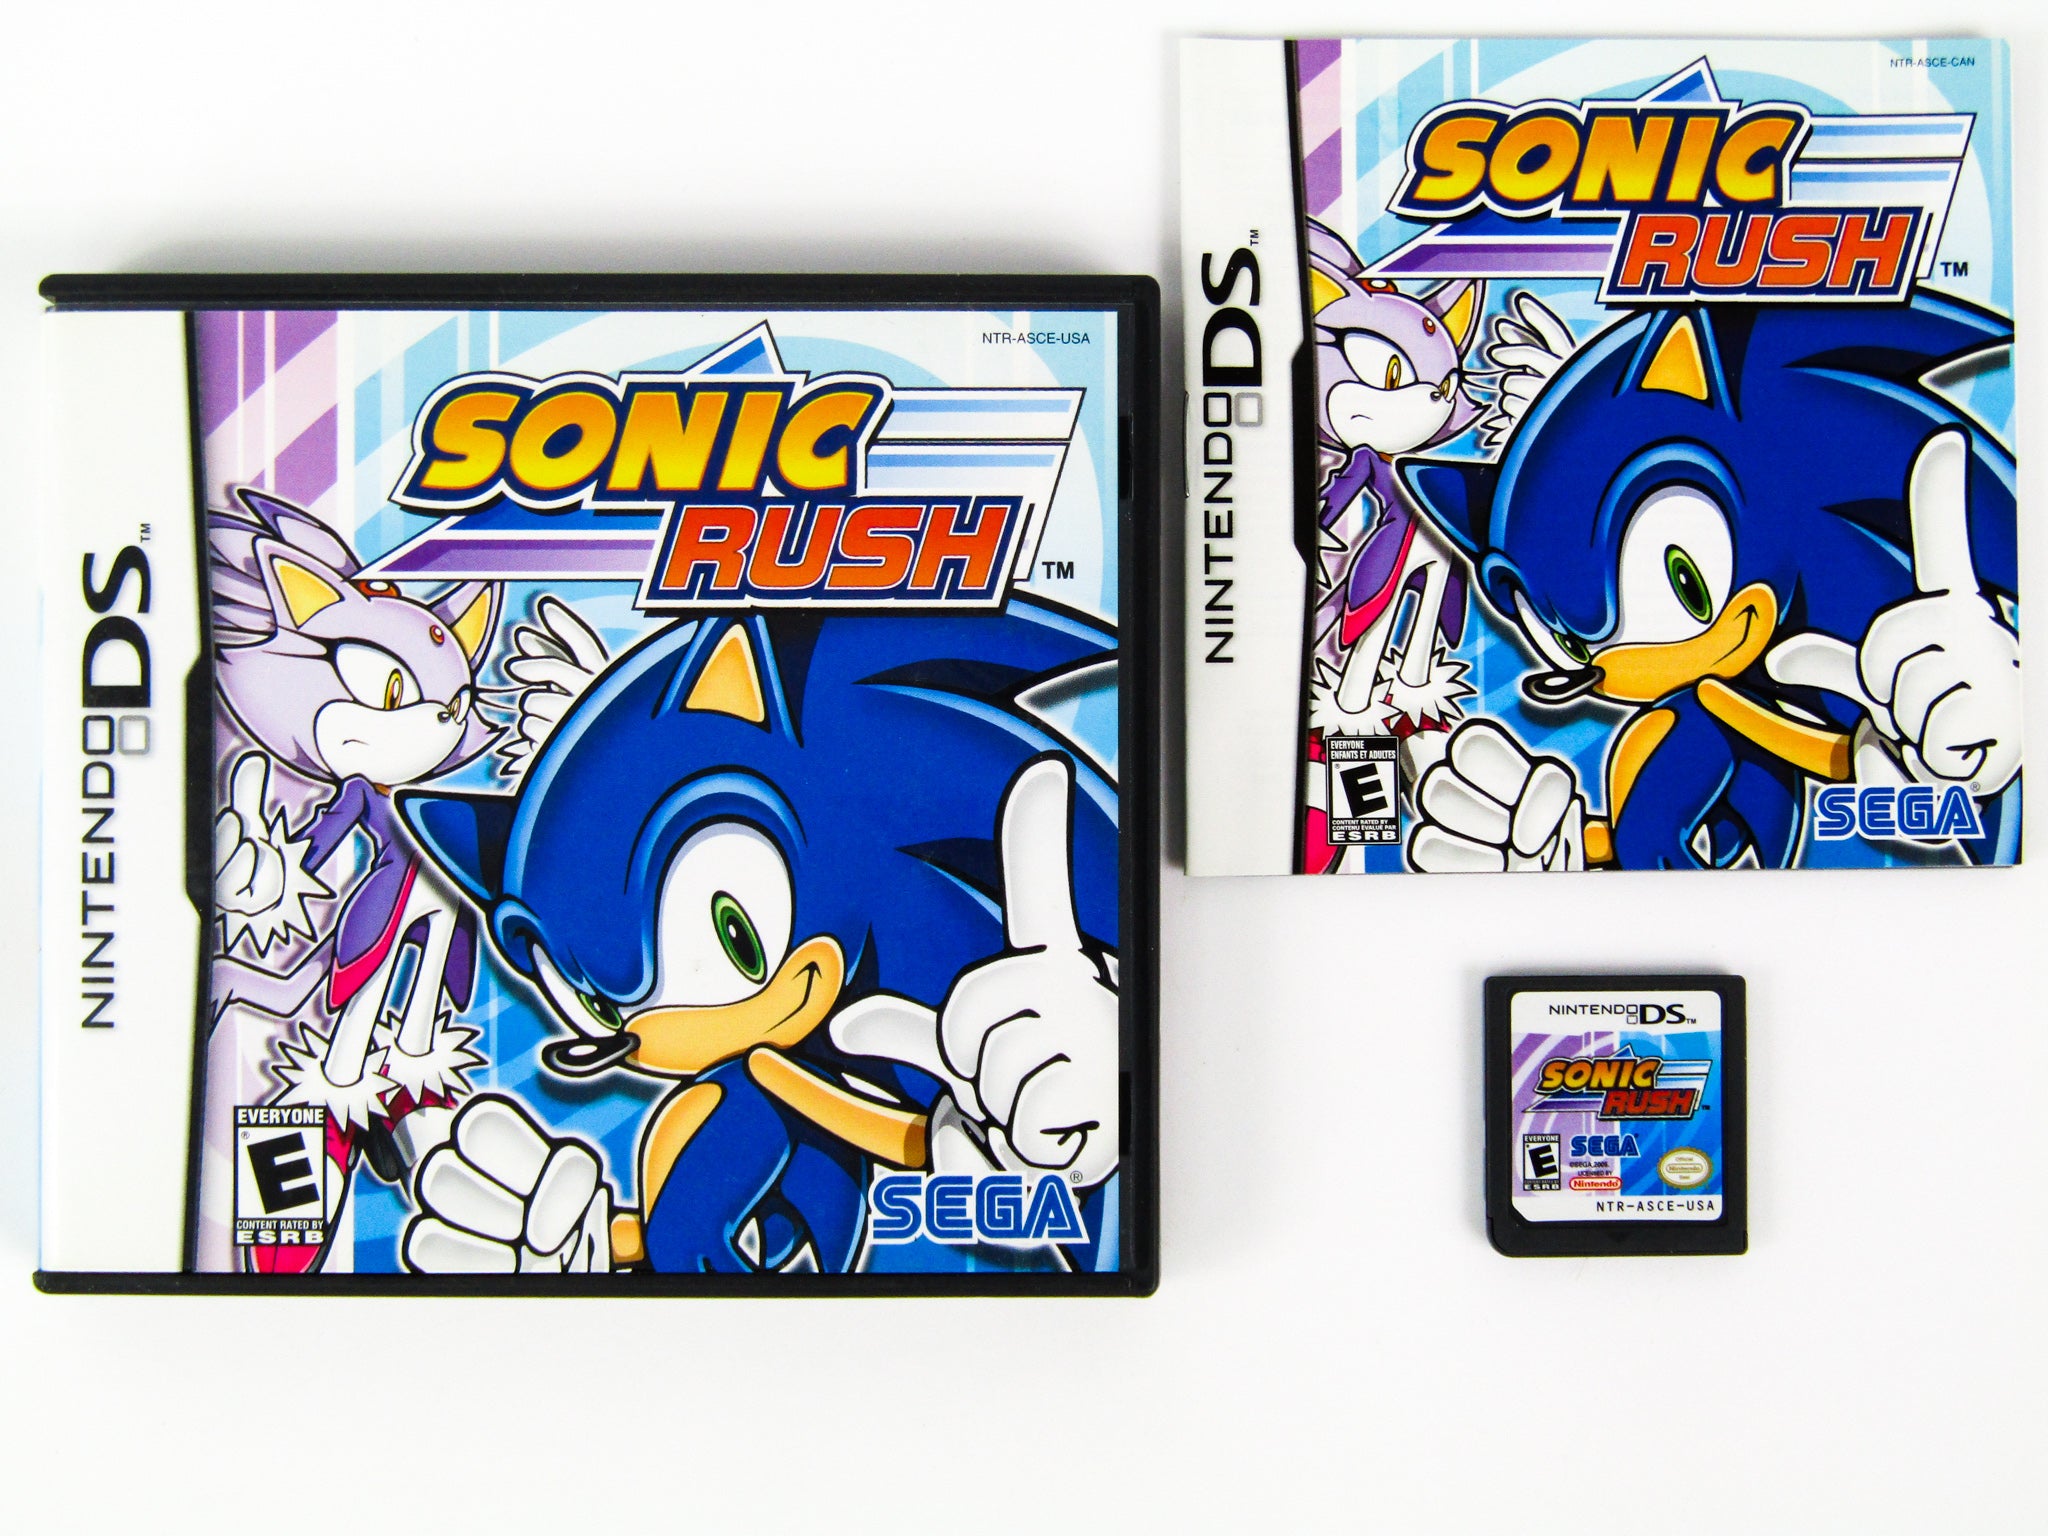 Sonic Colors (Nintendo Wii) – RetroMTL